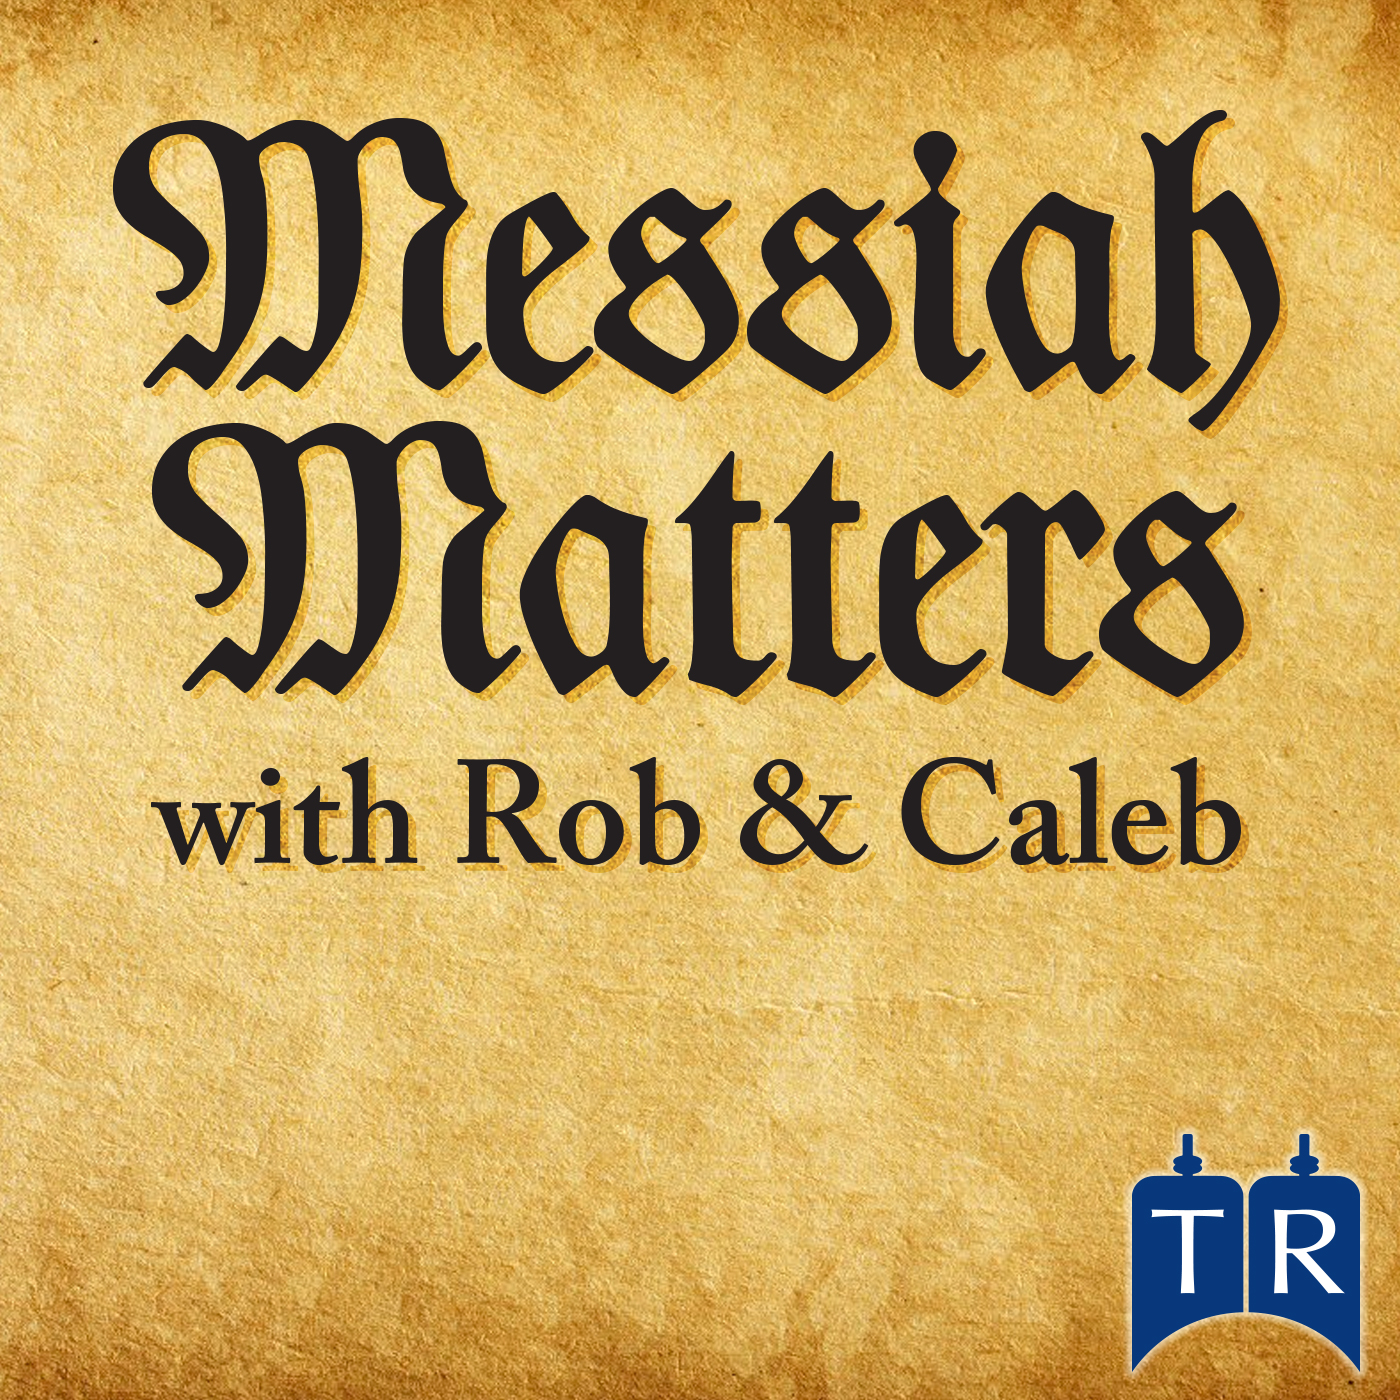 MP3 Art - messiah matters